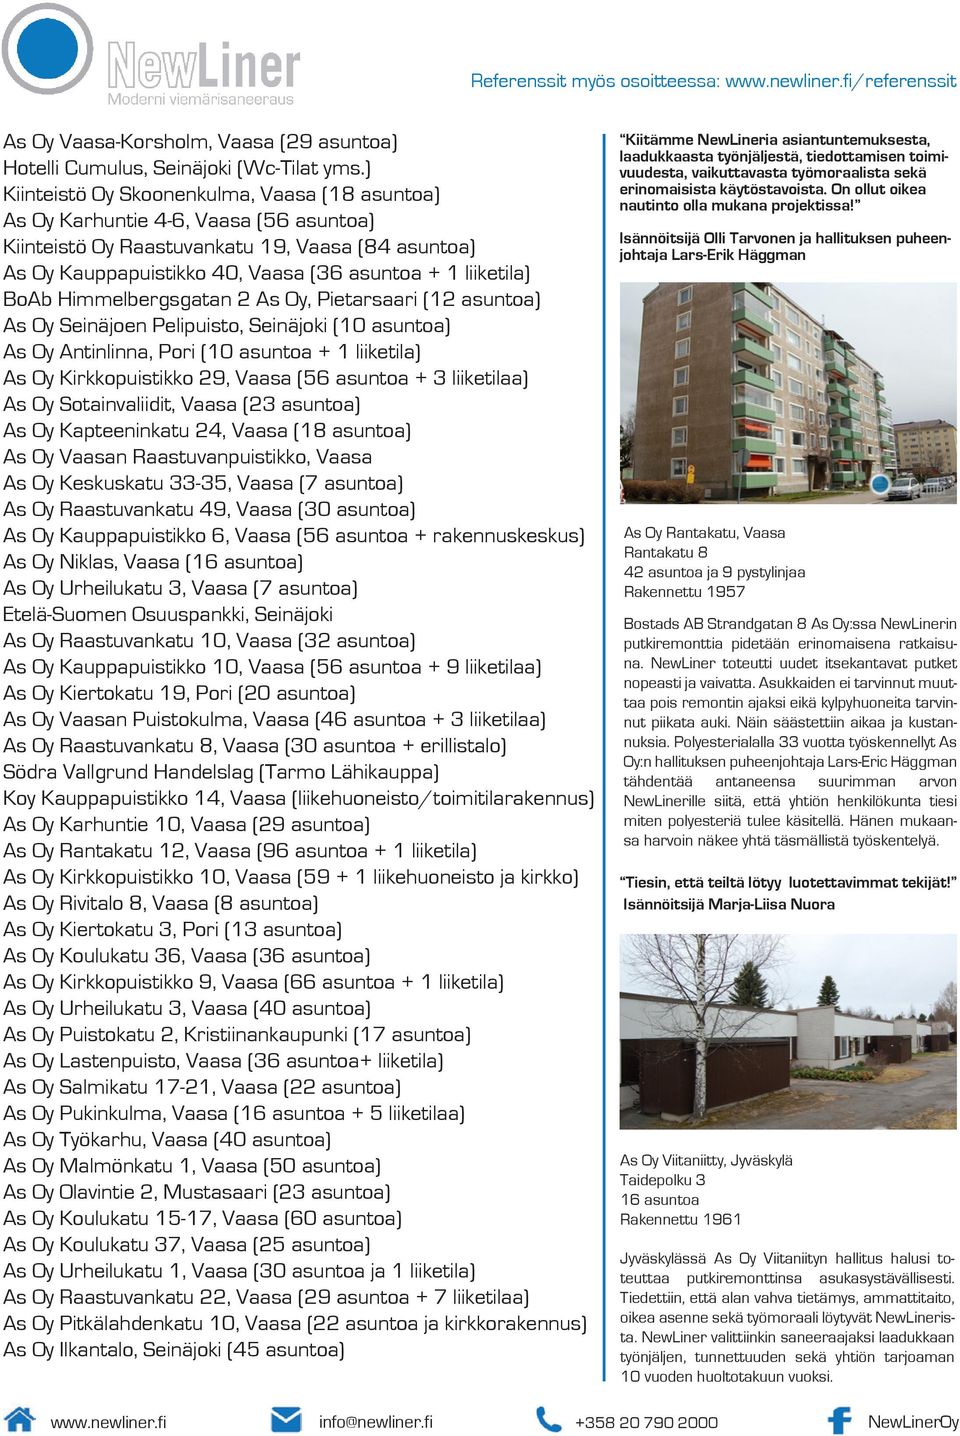 BoAb Himmelbergsgatan 2 As Oy, Pietarsaari (12 asuntoa) As Oy Seinäjoen Pelipuisto, Seinäjoki (10 asuntoa) As Oy Antinlinna, Pori (10 asuntoa + 1 liiketila) As Oy Kirkkopuistikko 29, Vaasa (56